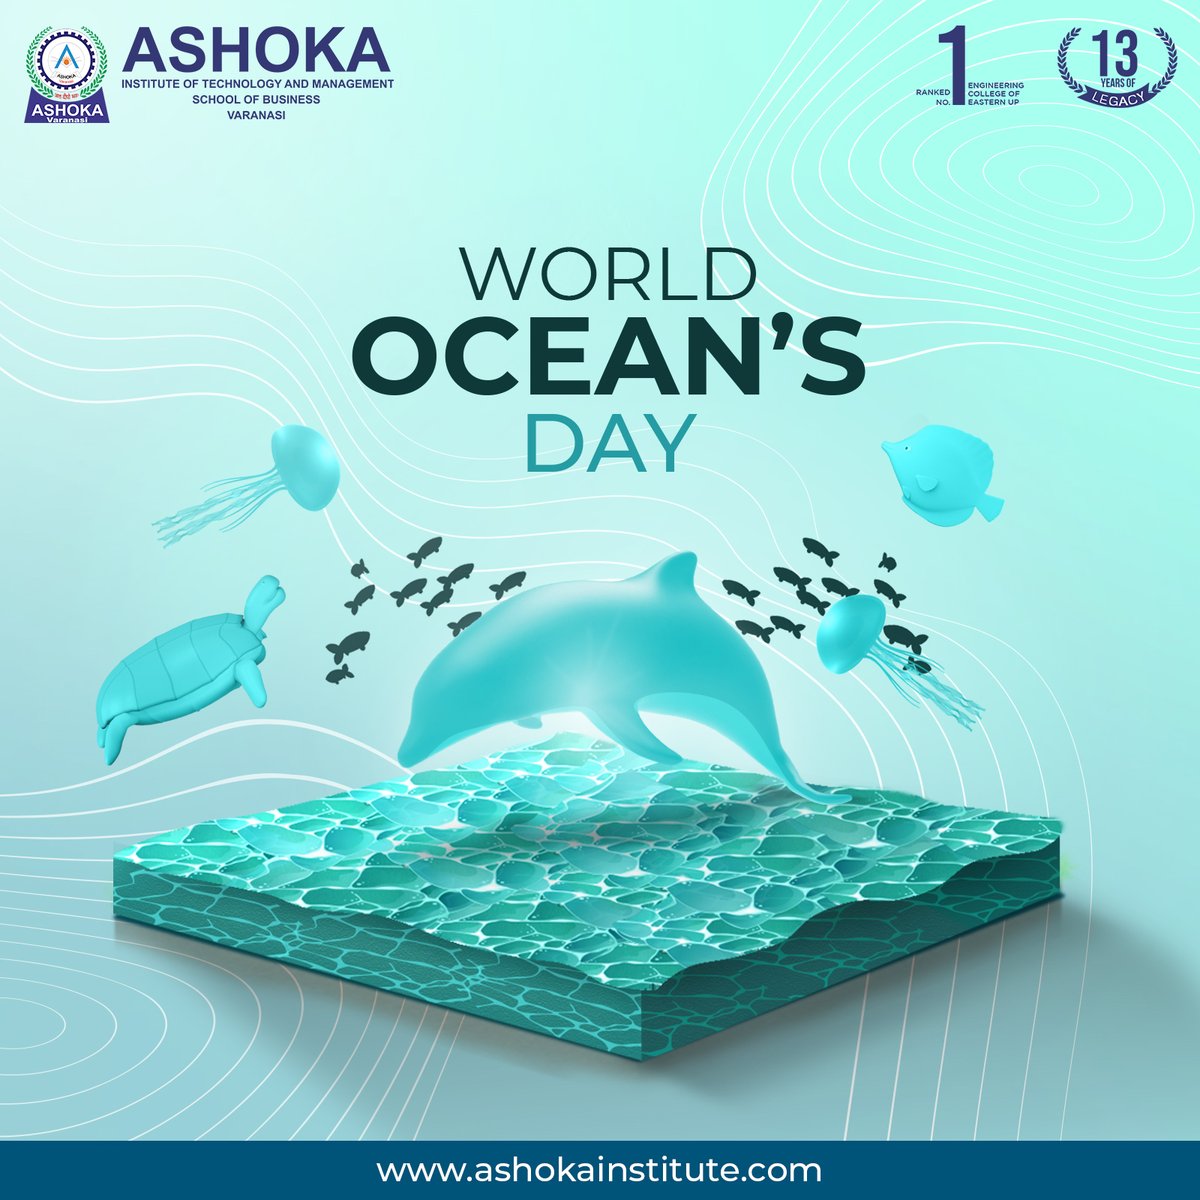 'Together, we can make a splash for a healthier and sustainable ocean ecosystem.'
#WorldOceanDay
#WorldOceanDay2023
#OceanConservation
#ProtectOurOceans
#BluePlanet
#SaveOurSeas
#MarineLife
#OceanAwareness
#SustainableOcean
#OceanLove
#CleanSeas
#Varanasi
#India